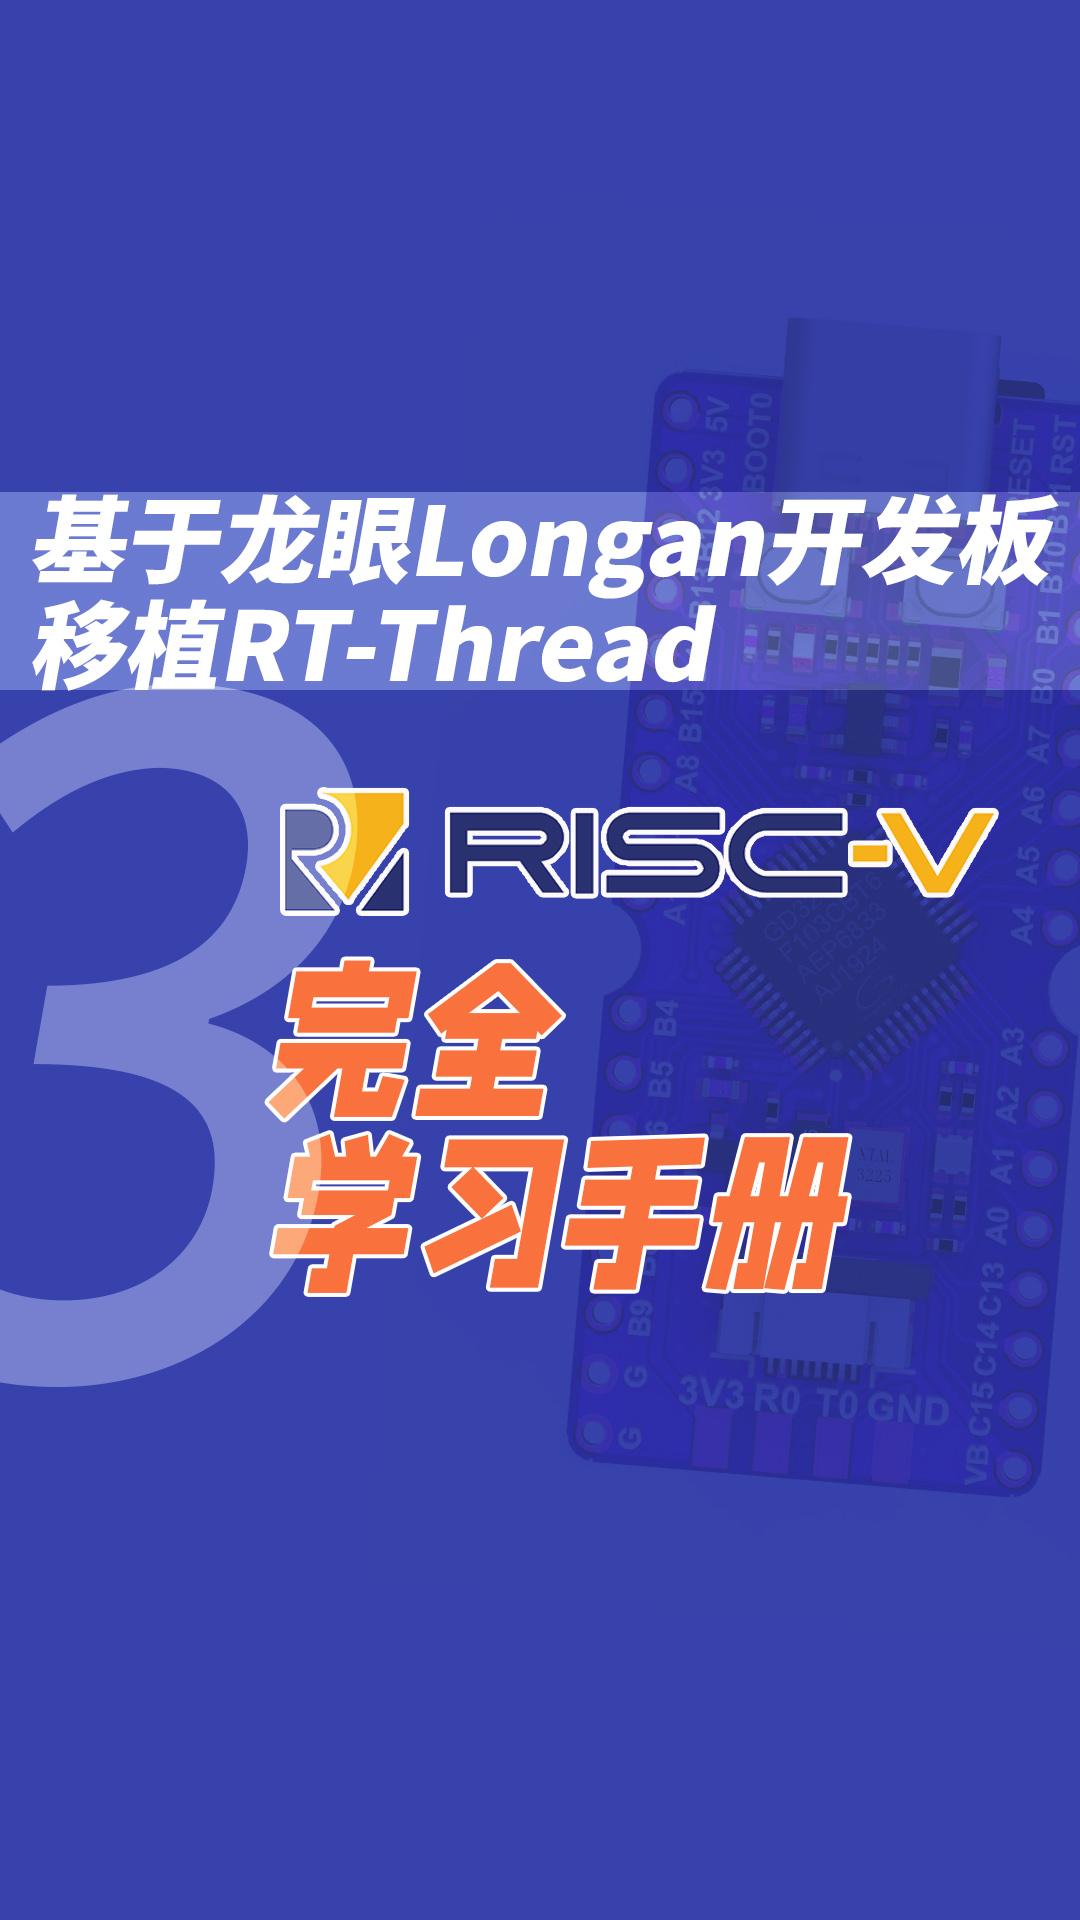 RISC-V完全学习手册(基于龙眼Longan开发板移植RT-Thread)3